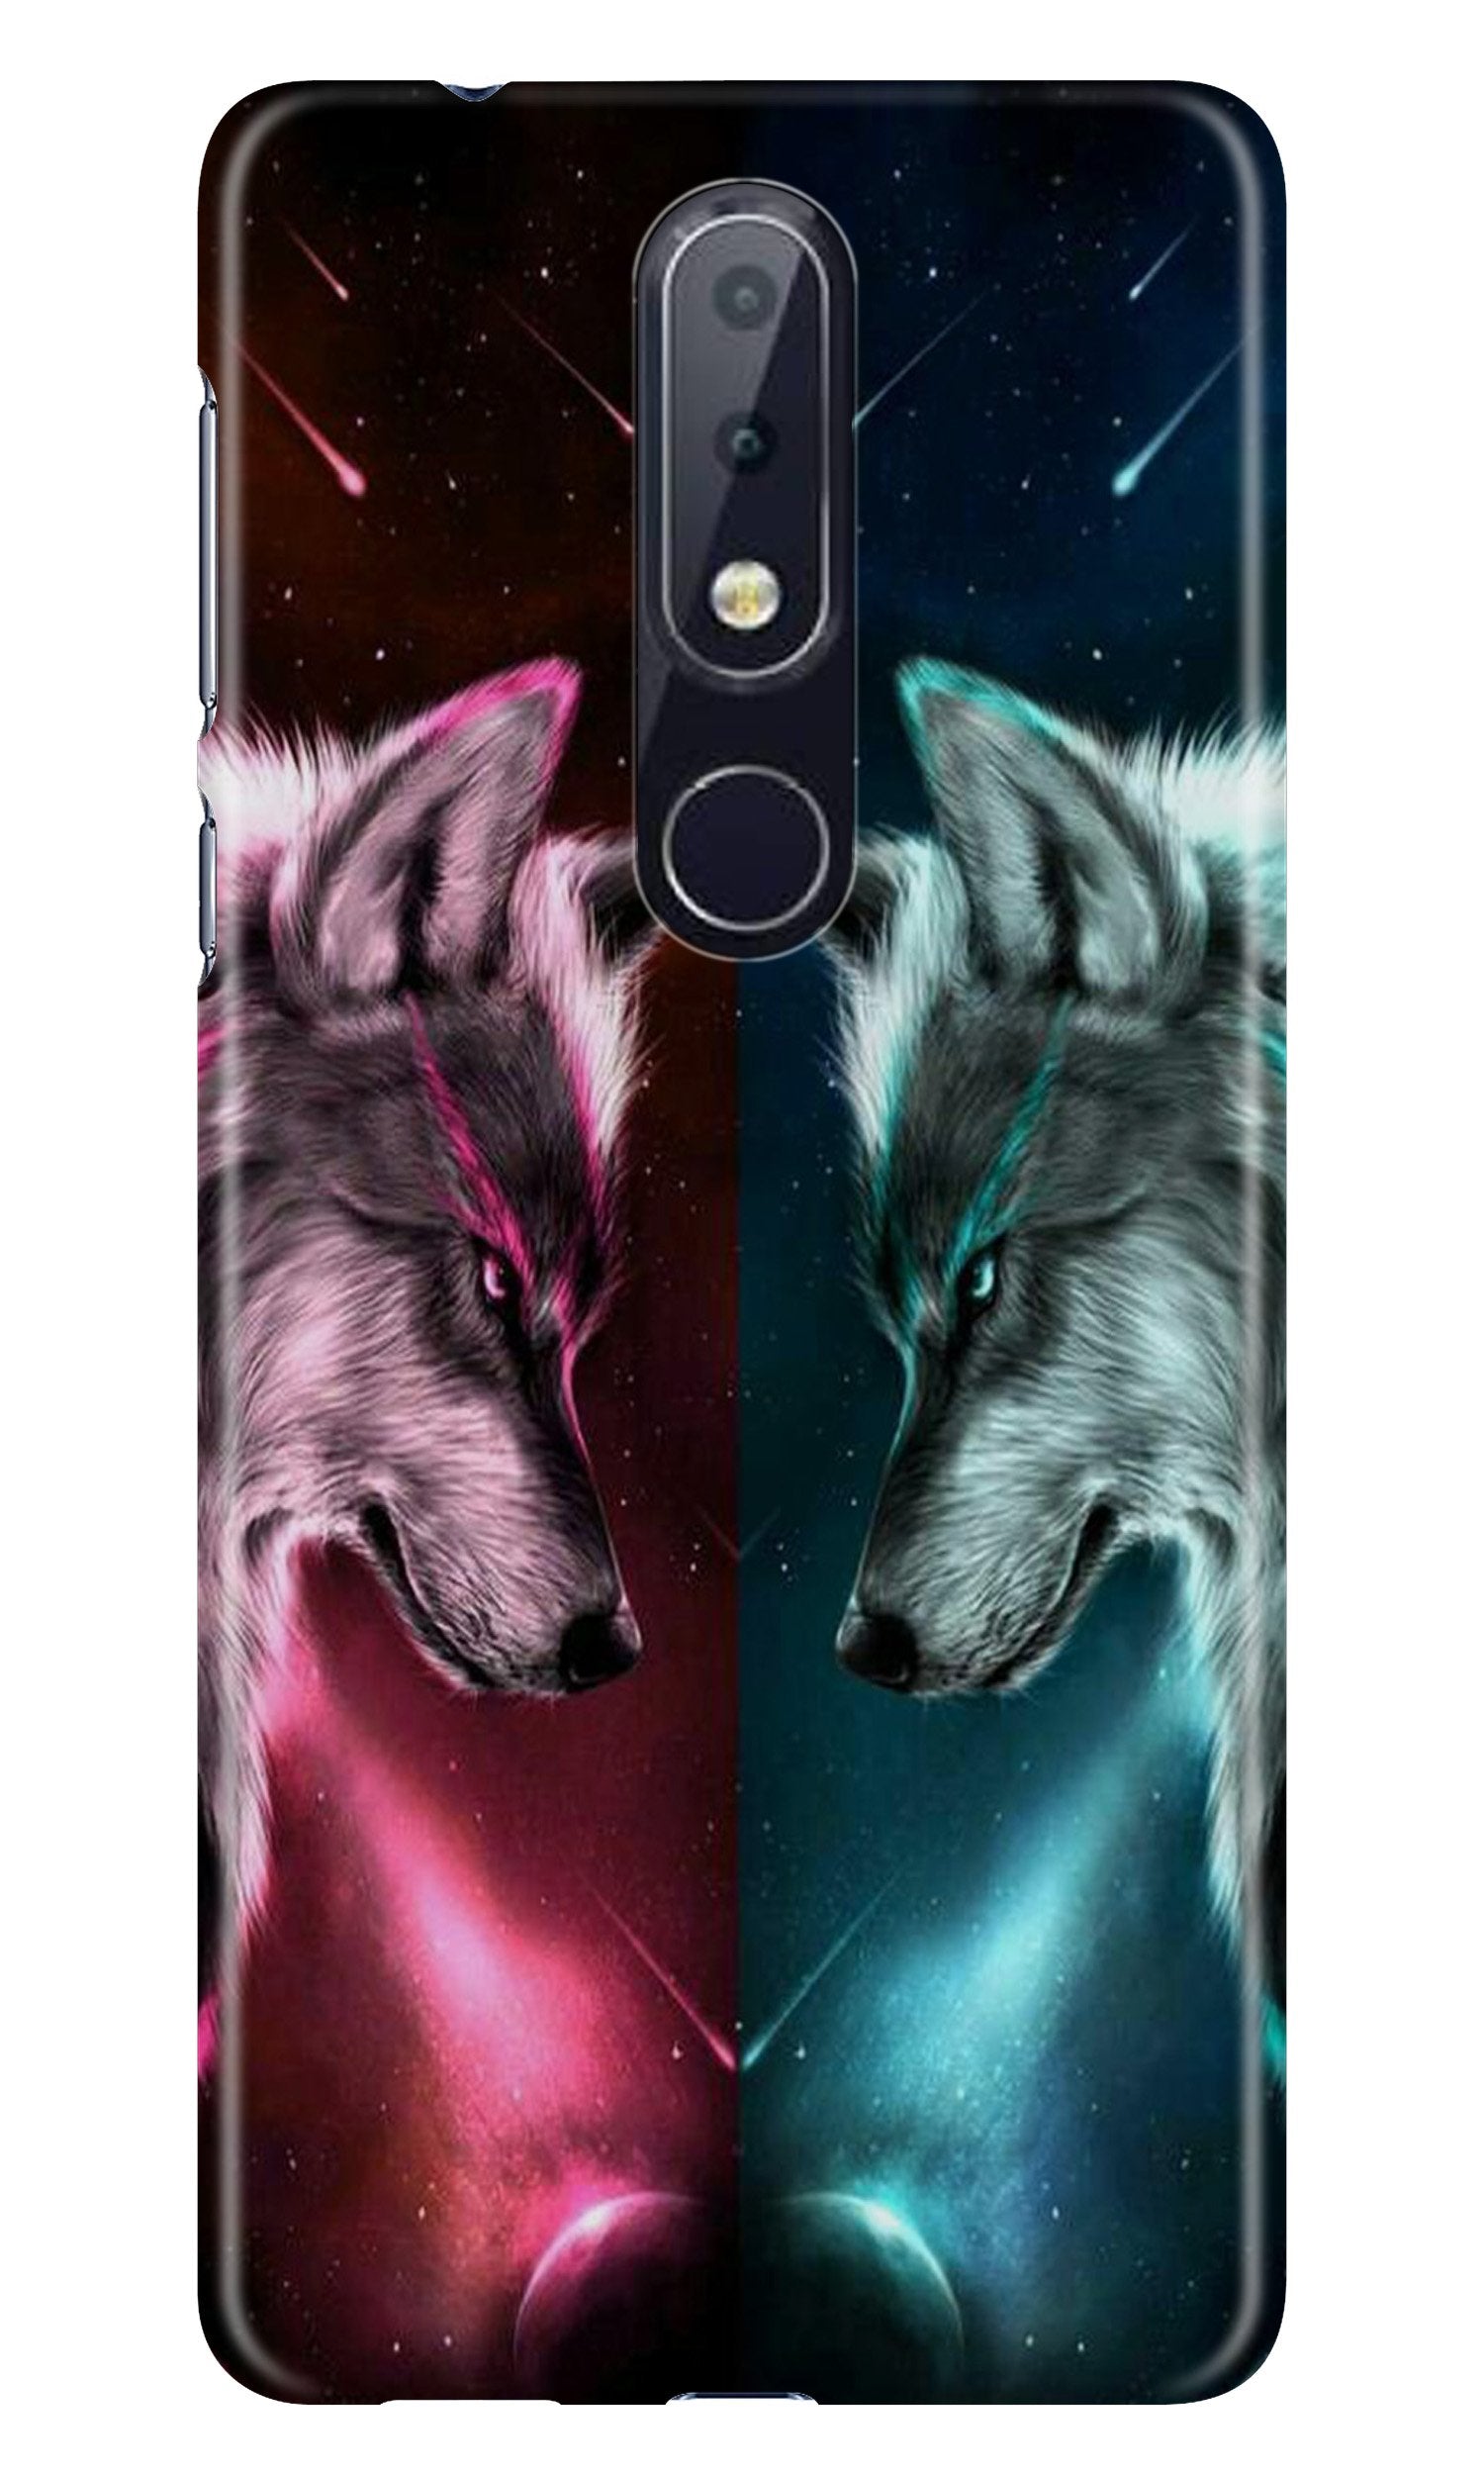 Wolf fight Case for Nokia 6.1 Plus (Design No. 221)